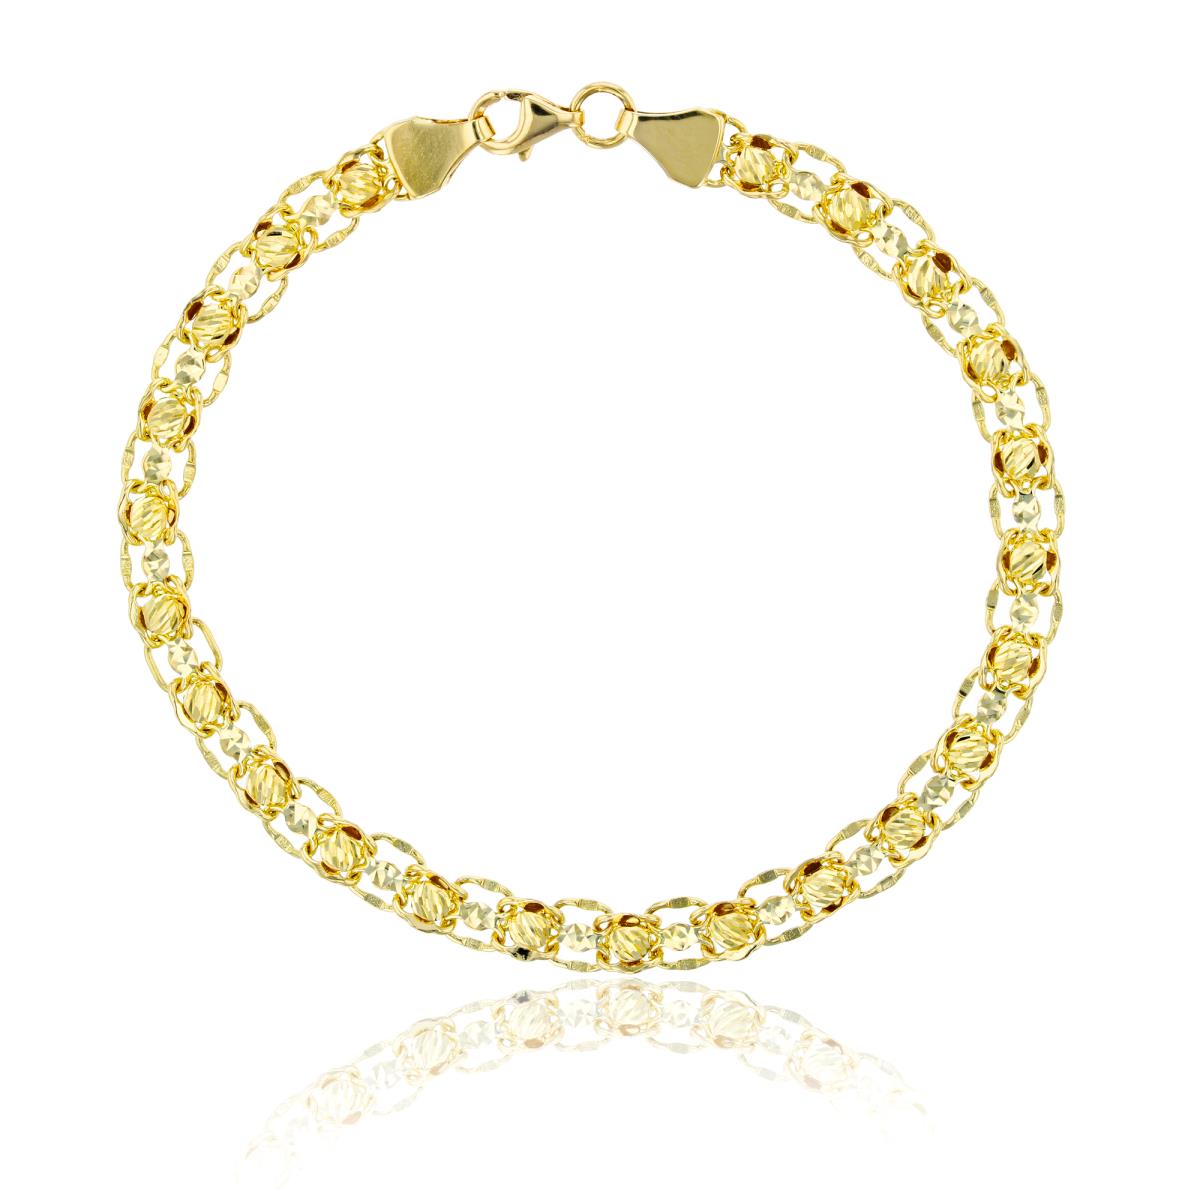 10K Yellow Gold Diamond Cut Beads Linked Bracelet